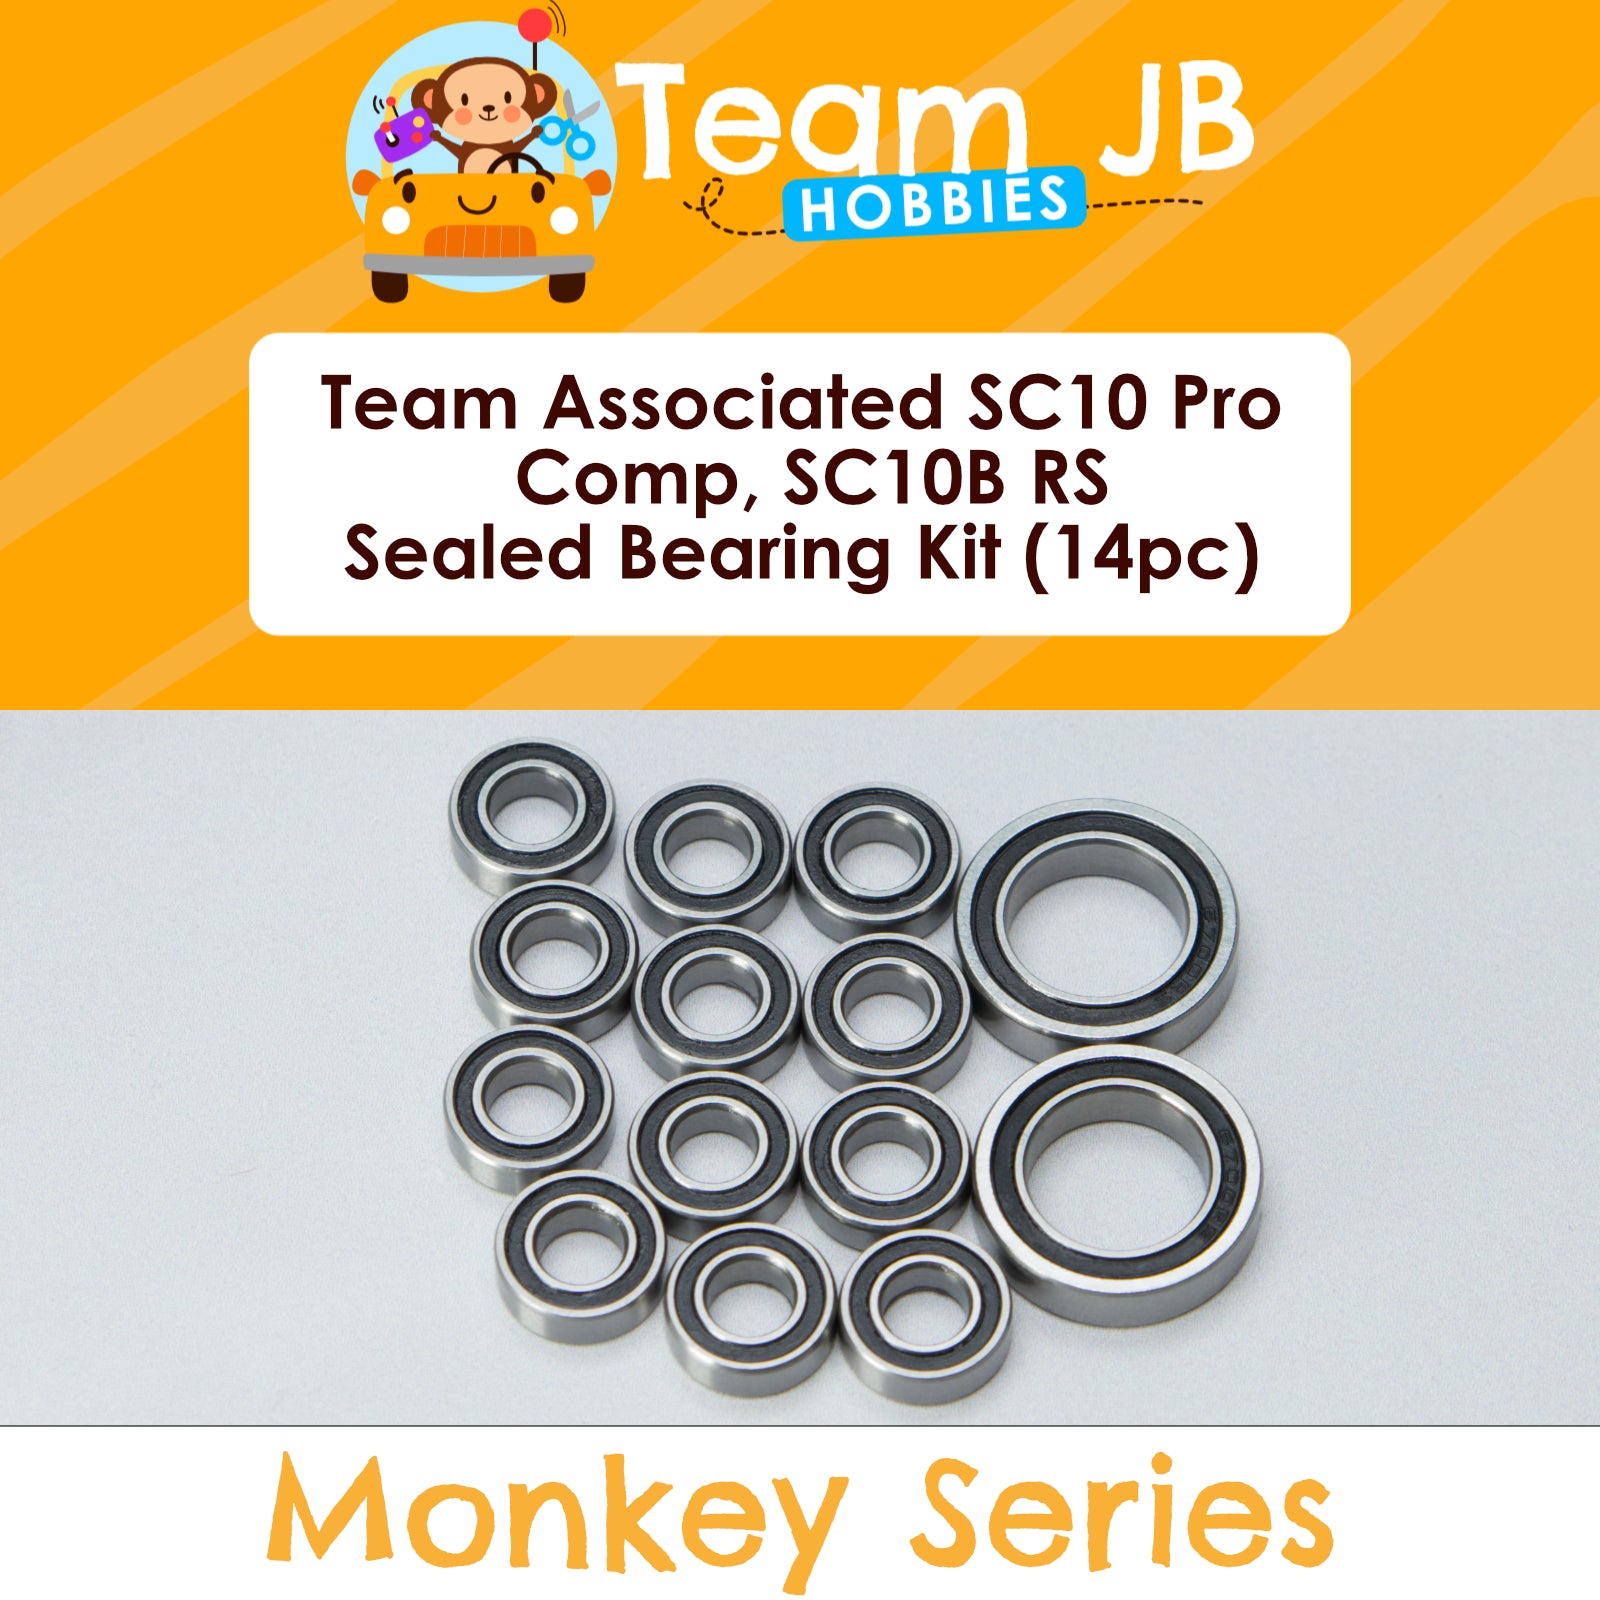 Team Associated SC10 Pro Comp, SC10B RS - Sealed Bearing Kit